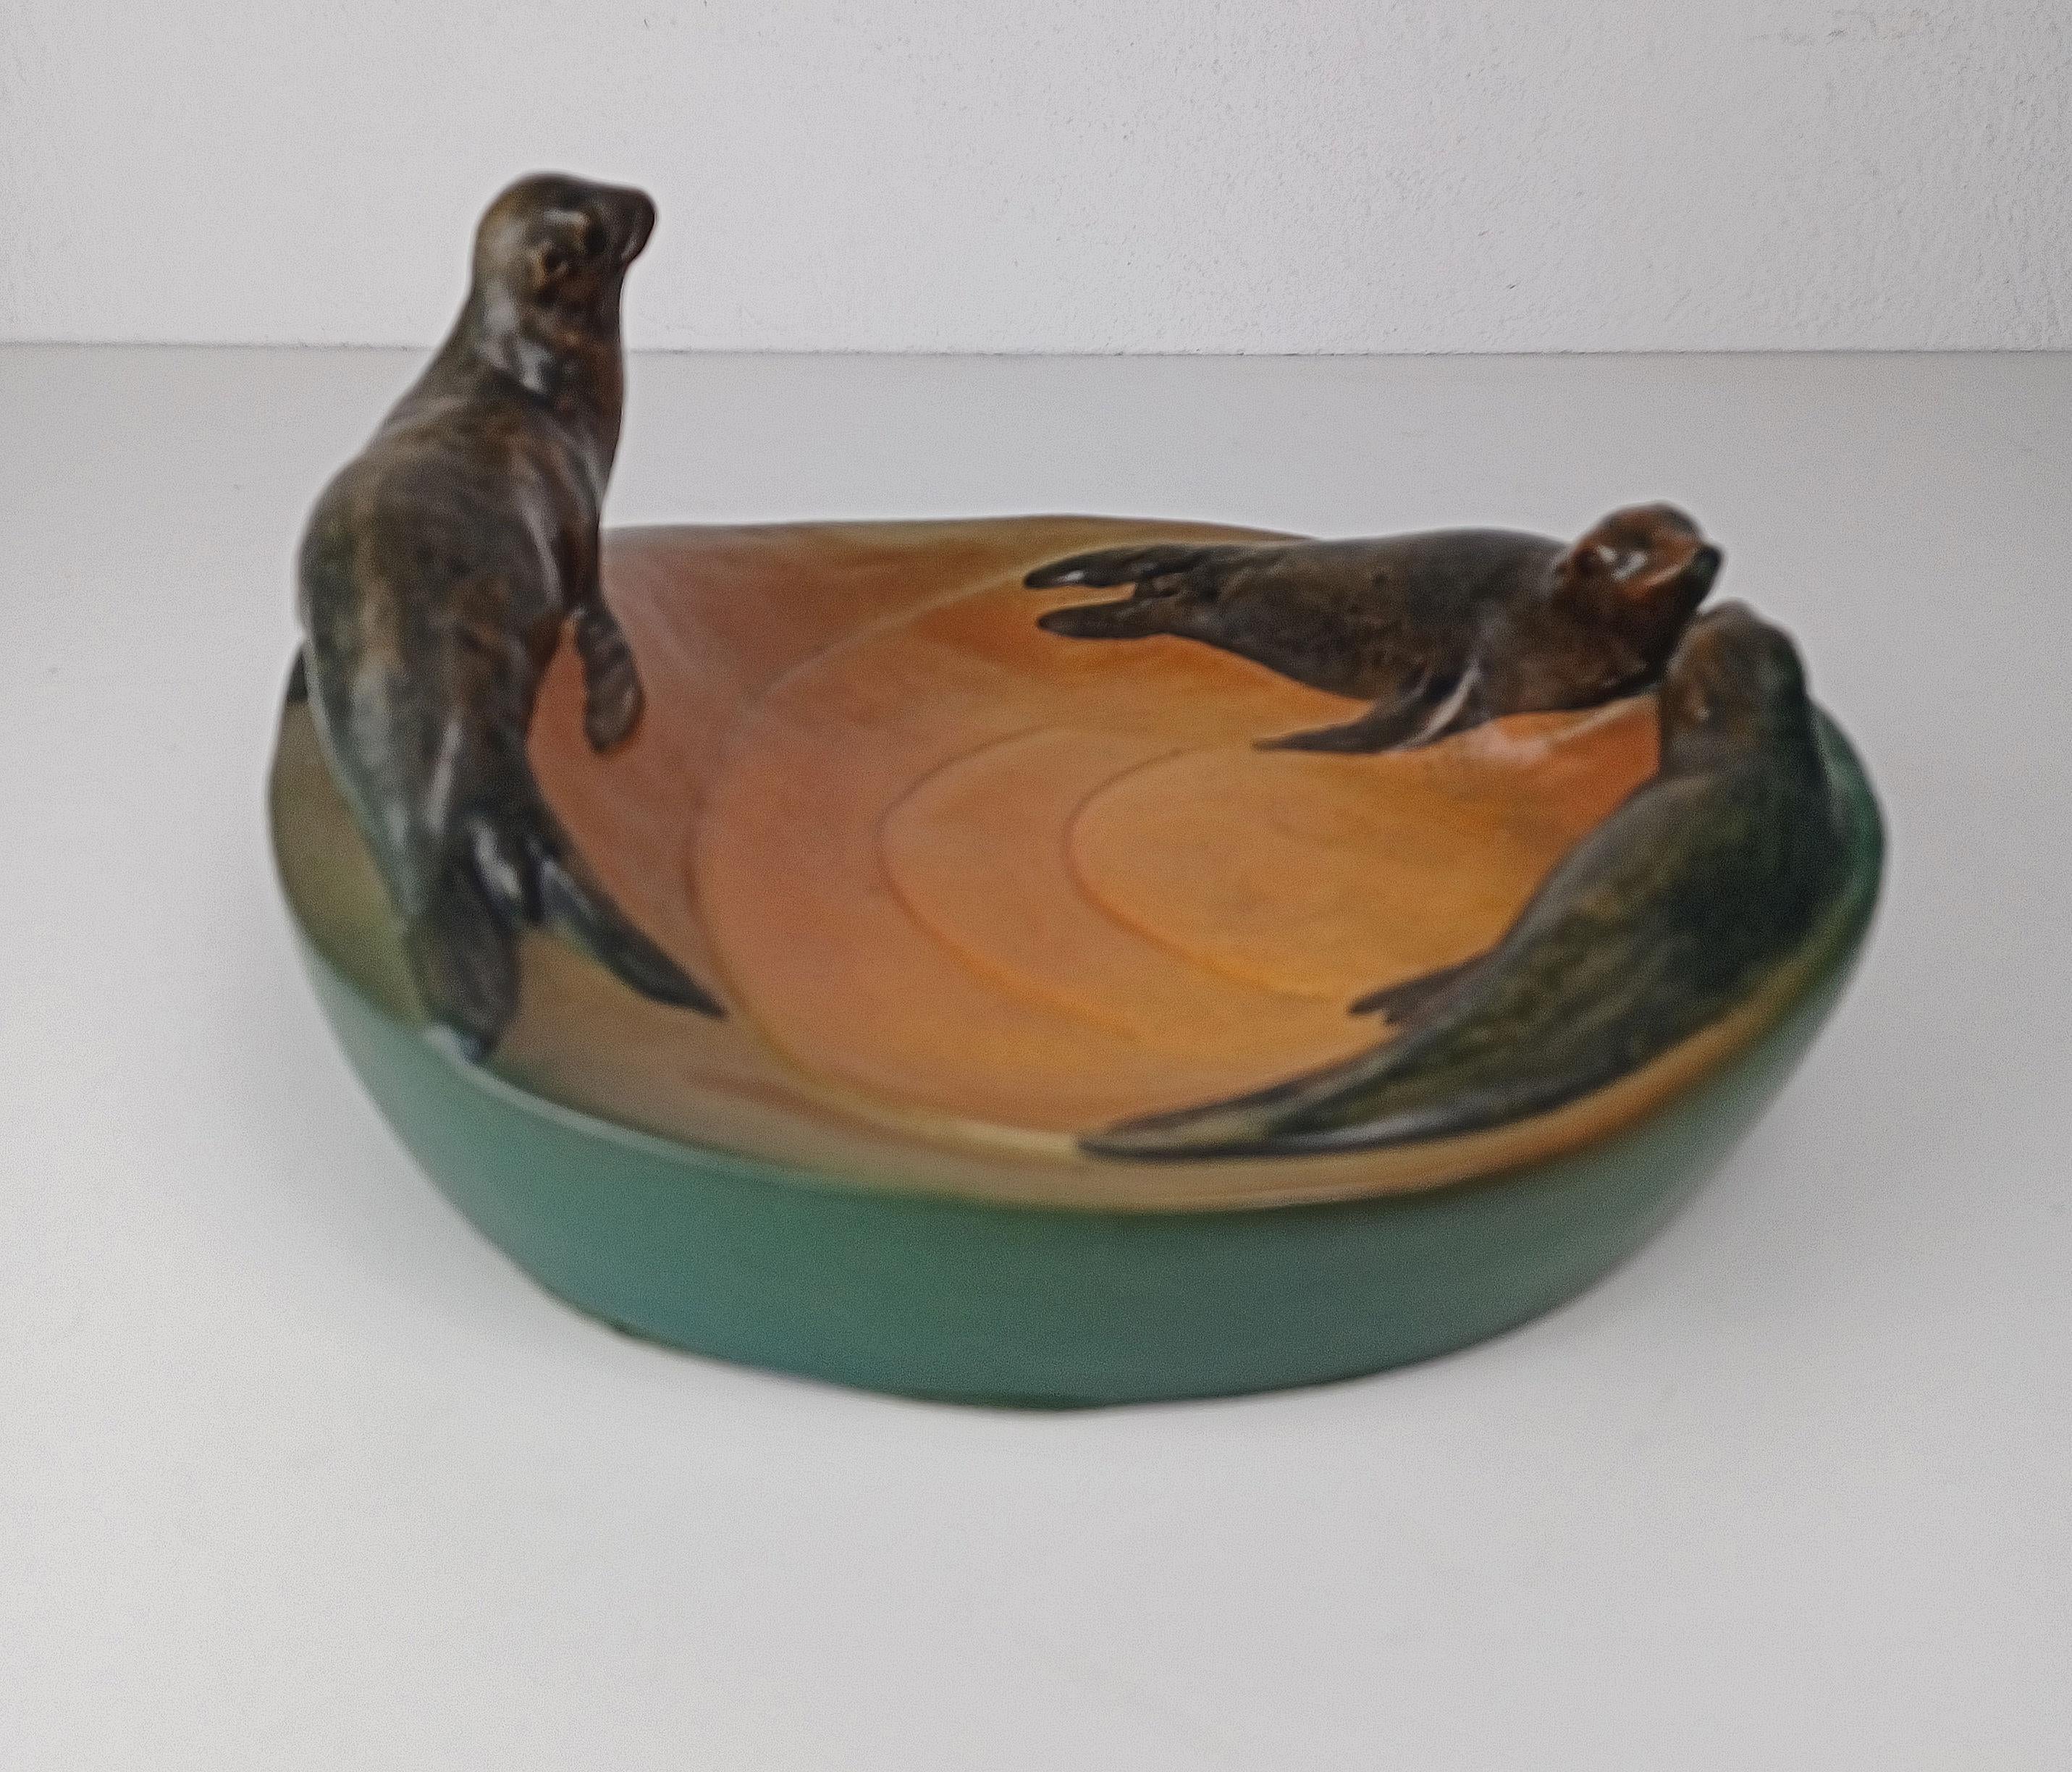 1910's Danish Art Nouveau Handcrafted Sealion Bowl - Ash Tray by P. Ipsens Enke For Sale 2